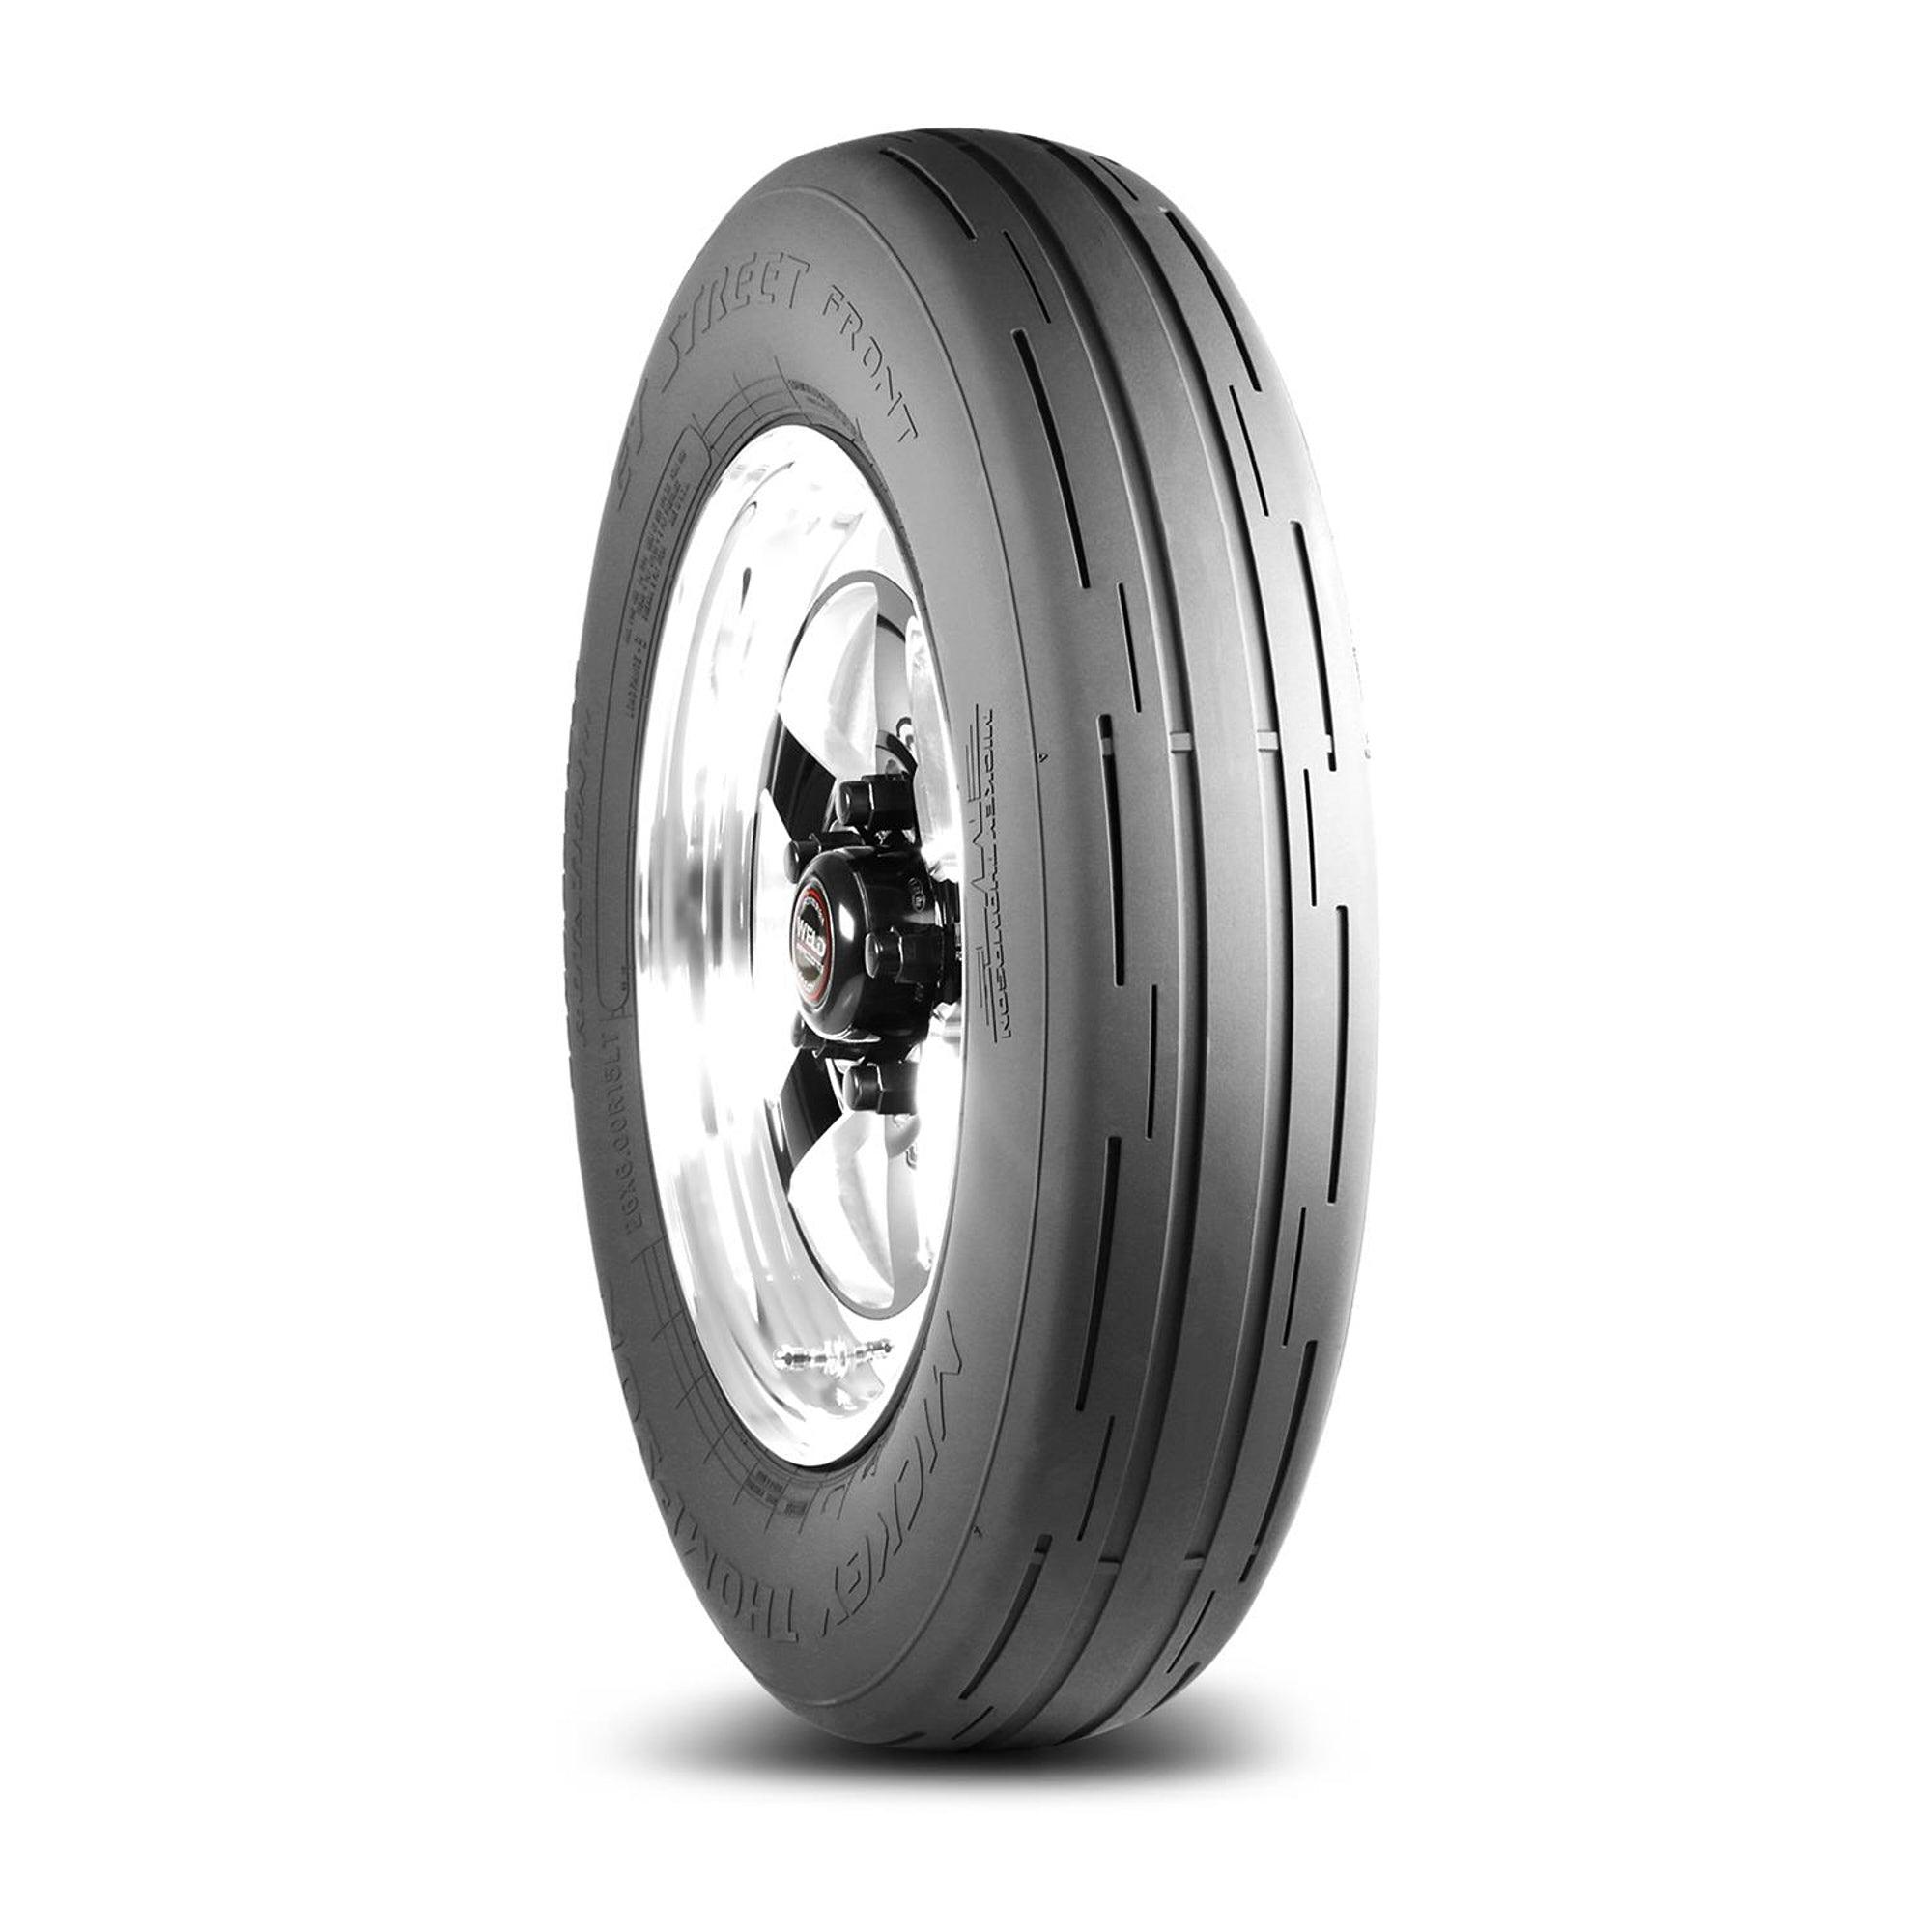 ET Sreet Radial Front Tire 26x6.00R17LT - Burlile Performance Products